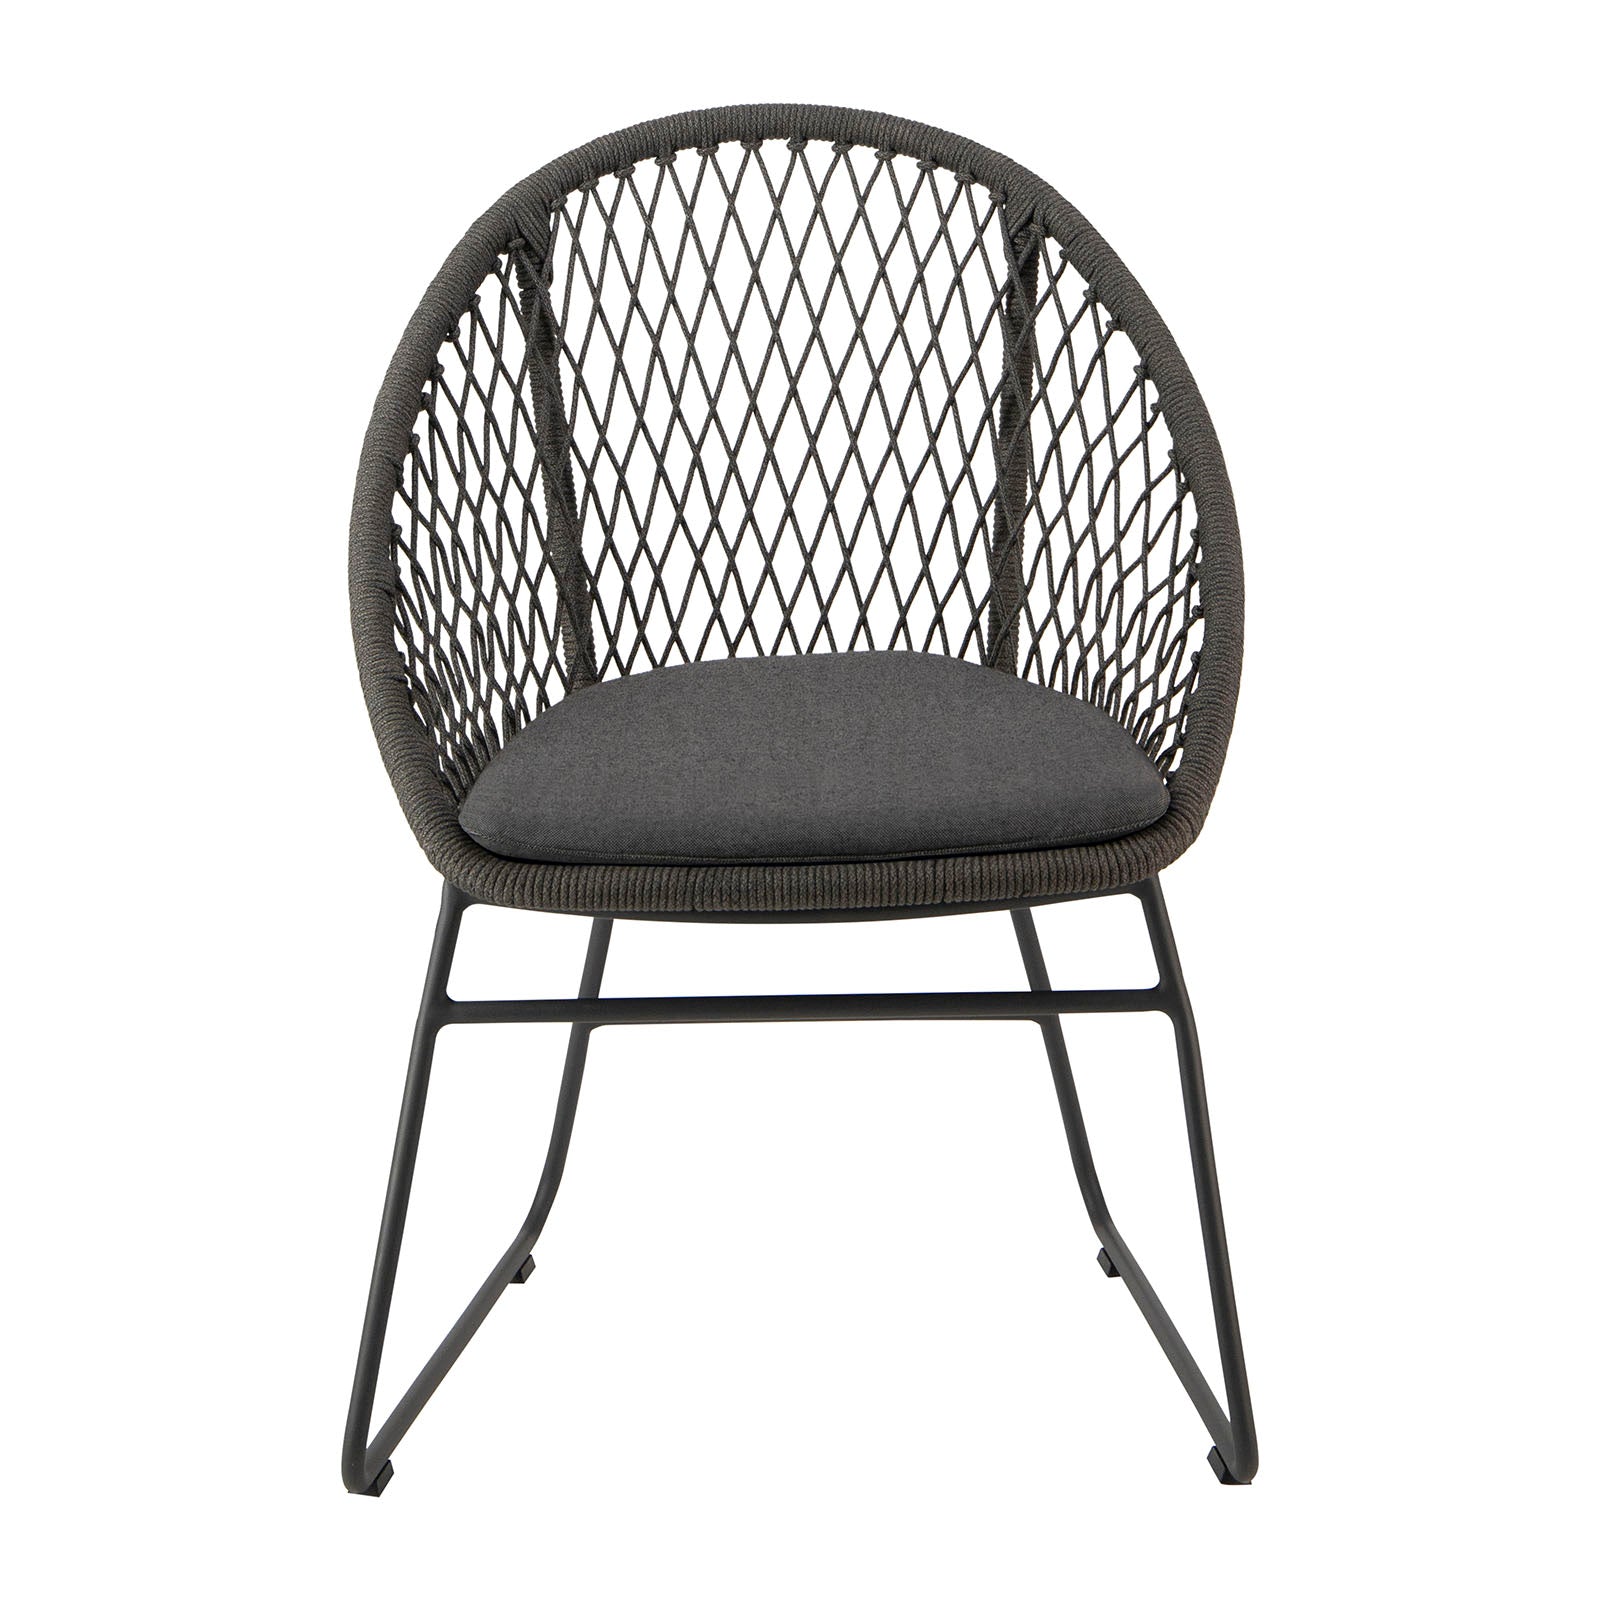 Zaha Cross Weave Outdoor Dining Chair - Agora Panama Coal